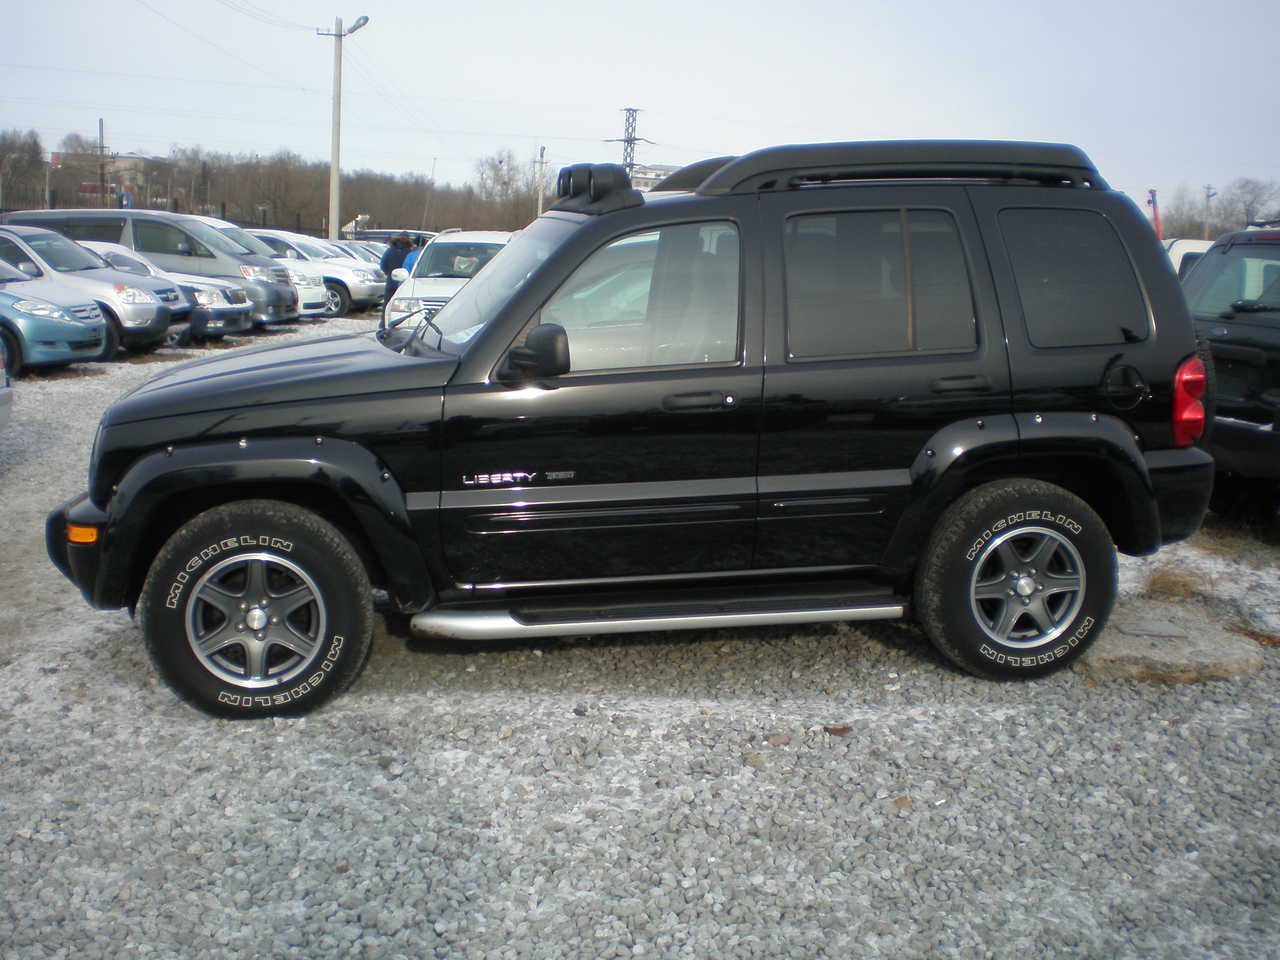 2003 Jeep liberty transmission price